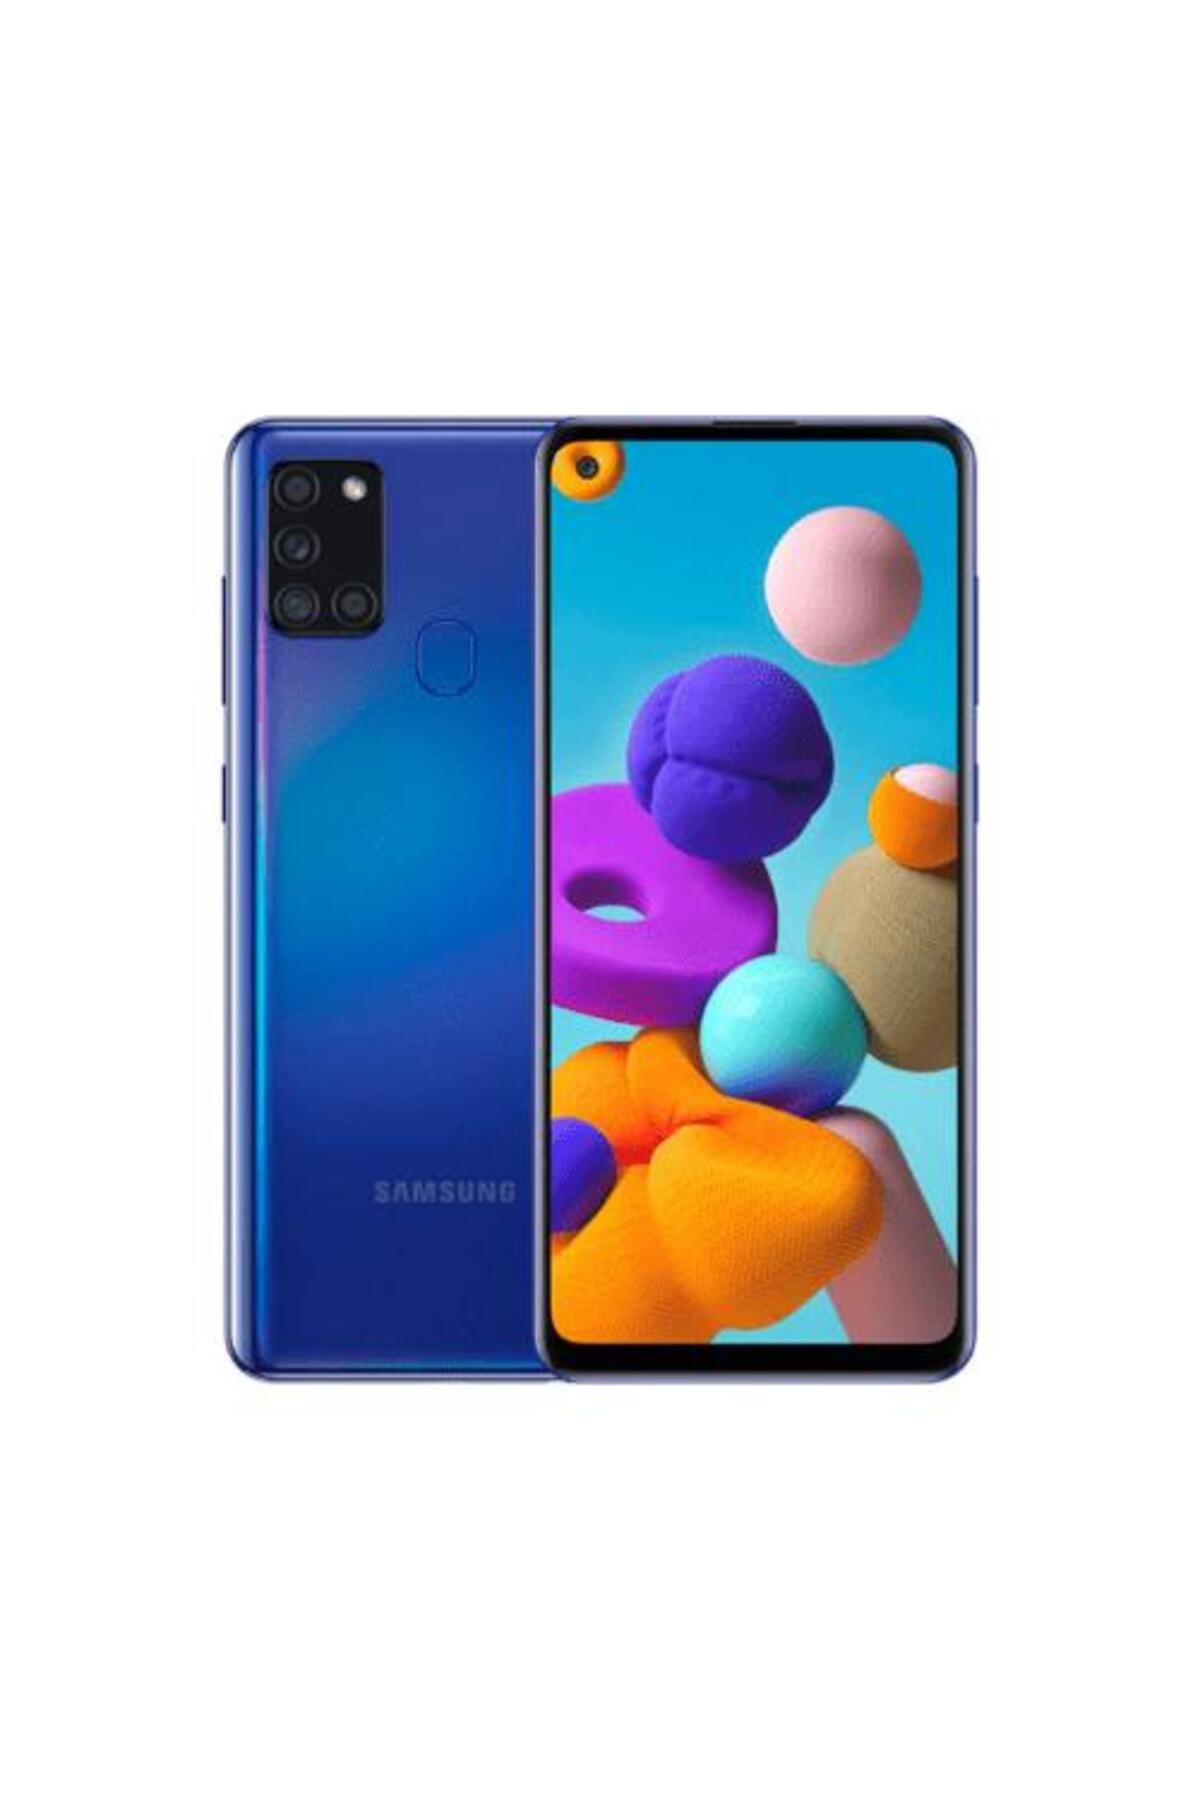 Samsung Yenilenmiş Galaxy A21s 64gb -a Kalite- Mavi